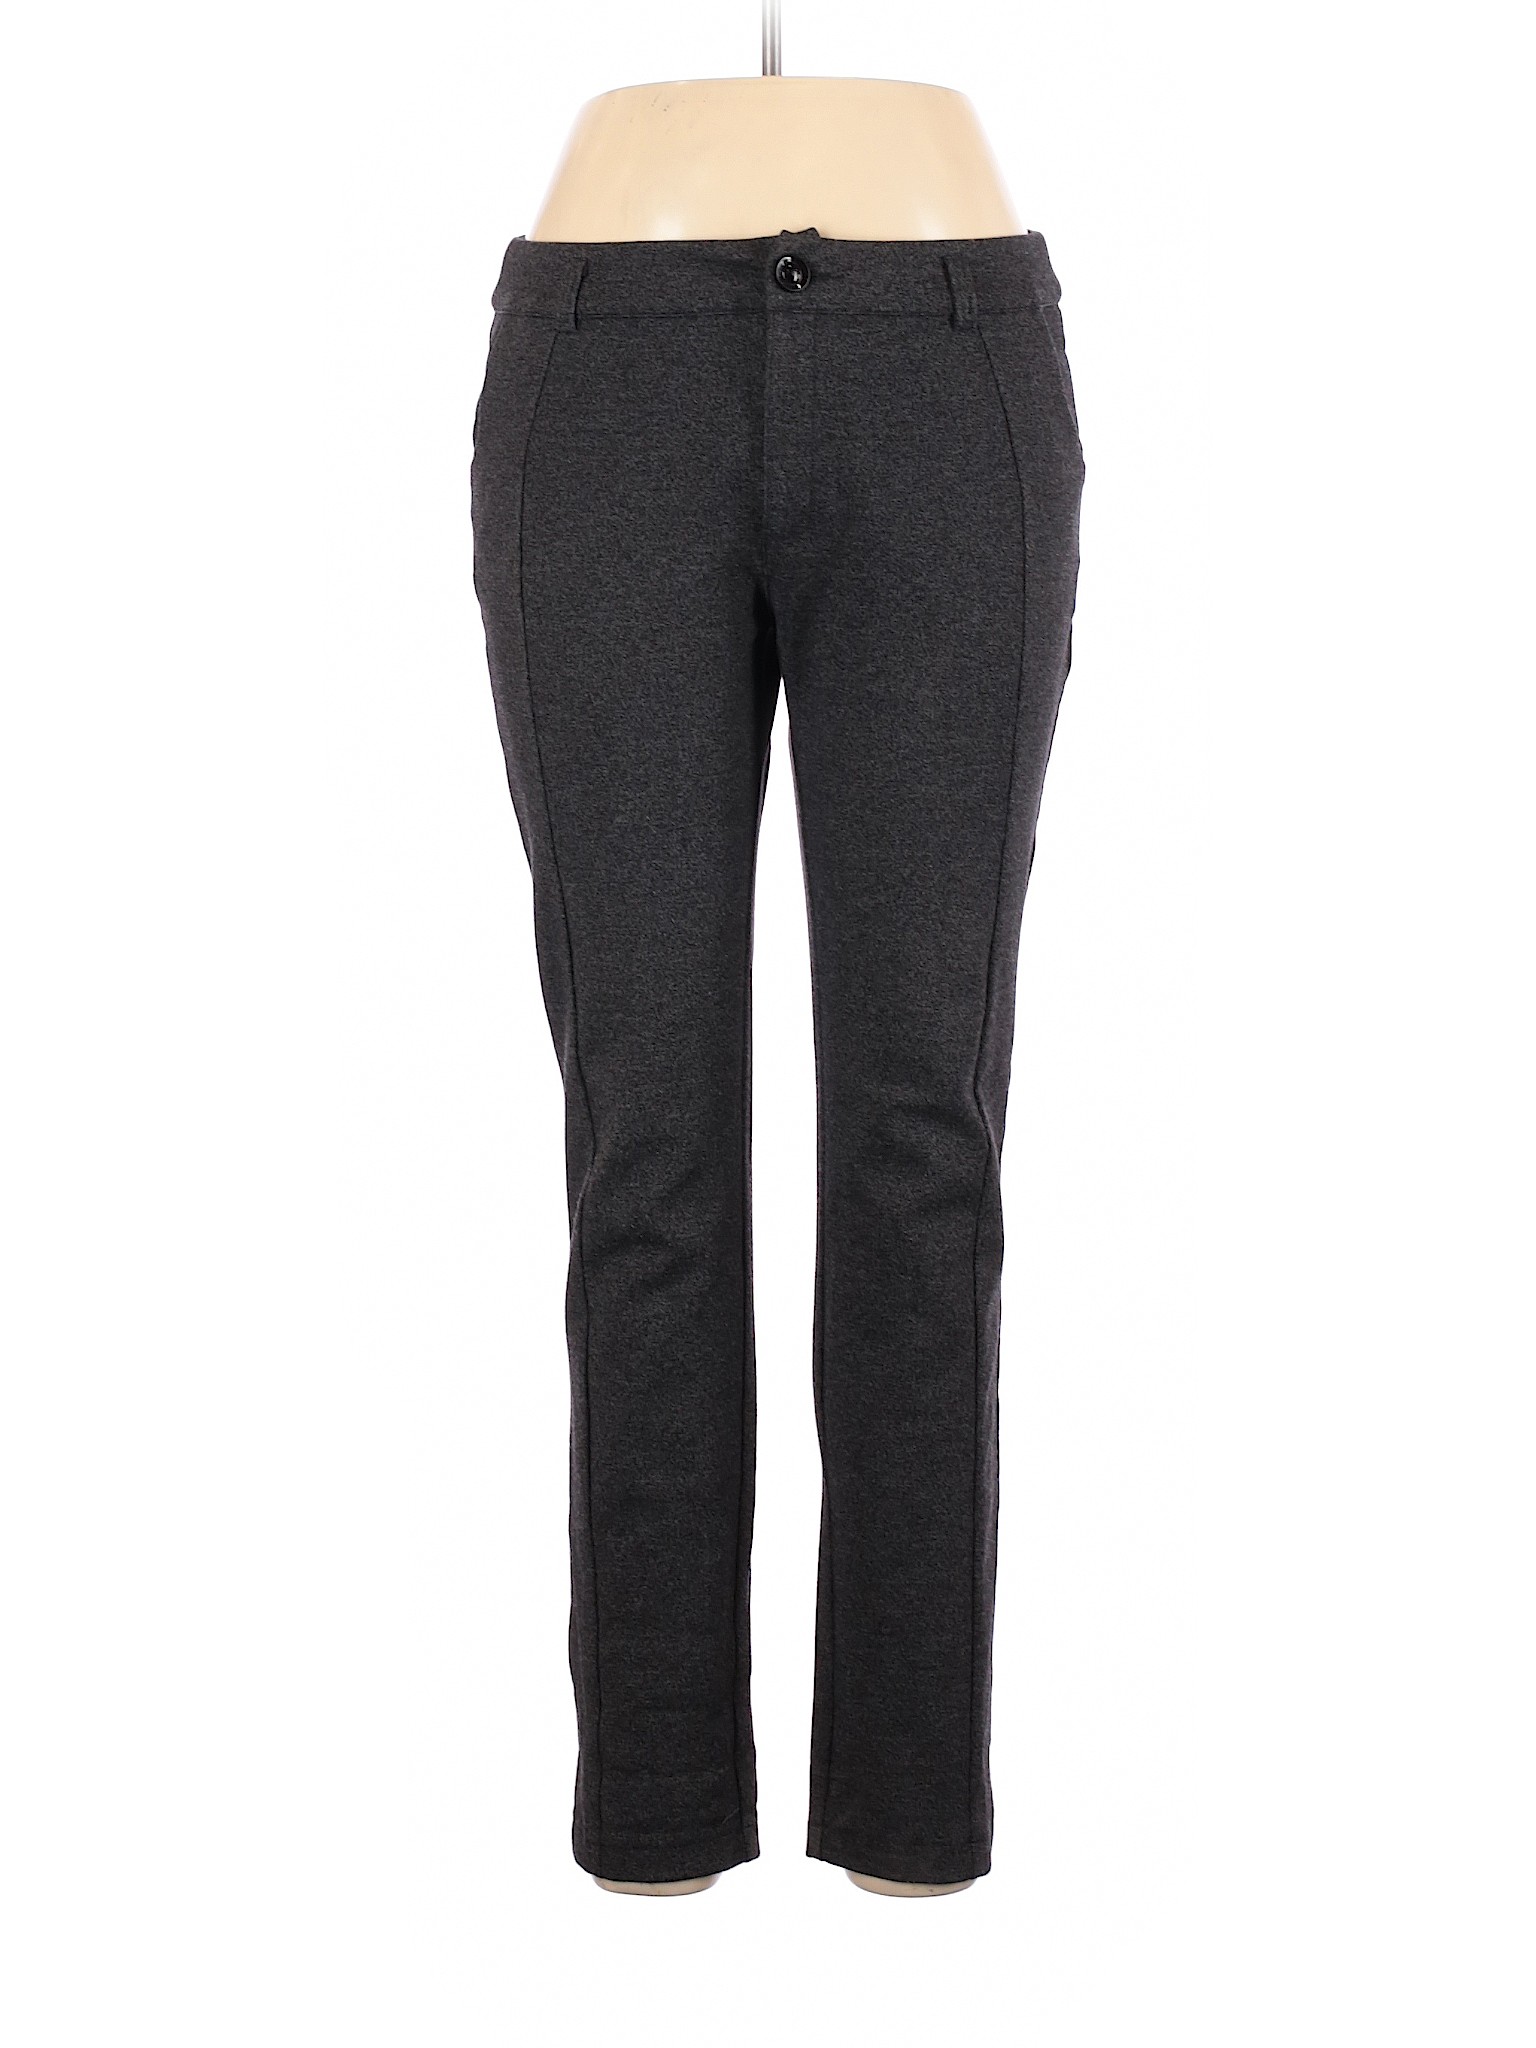 Unbranded Women Black Casual Pants L | eBay